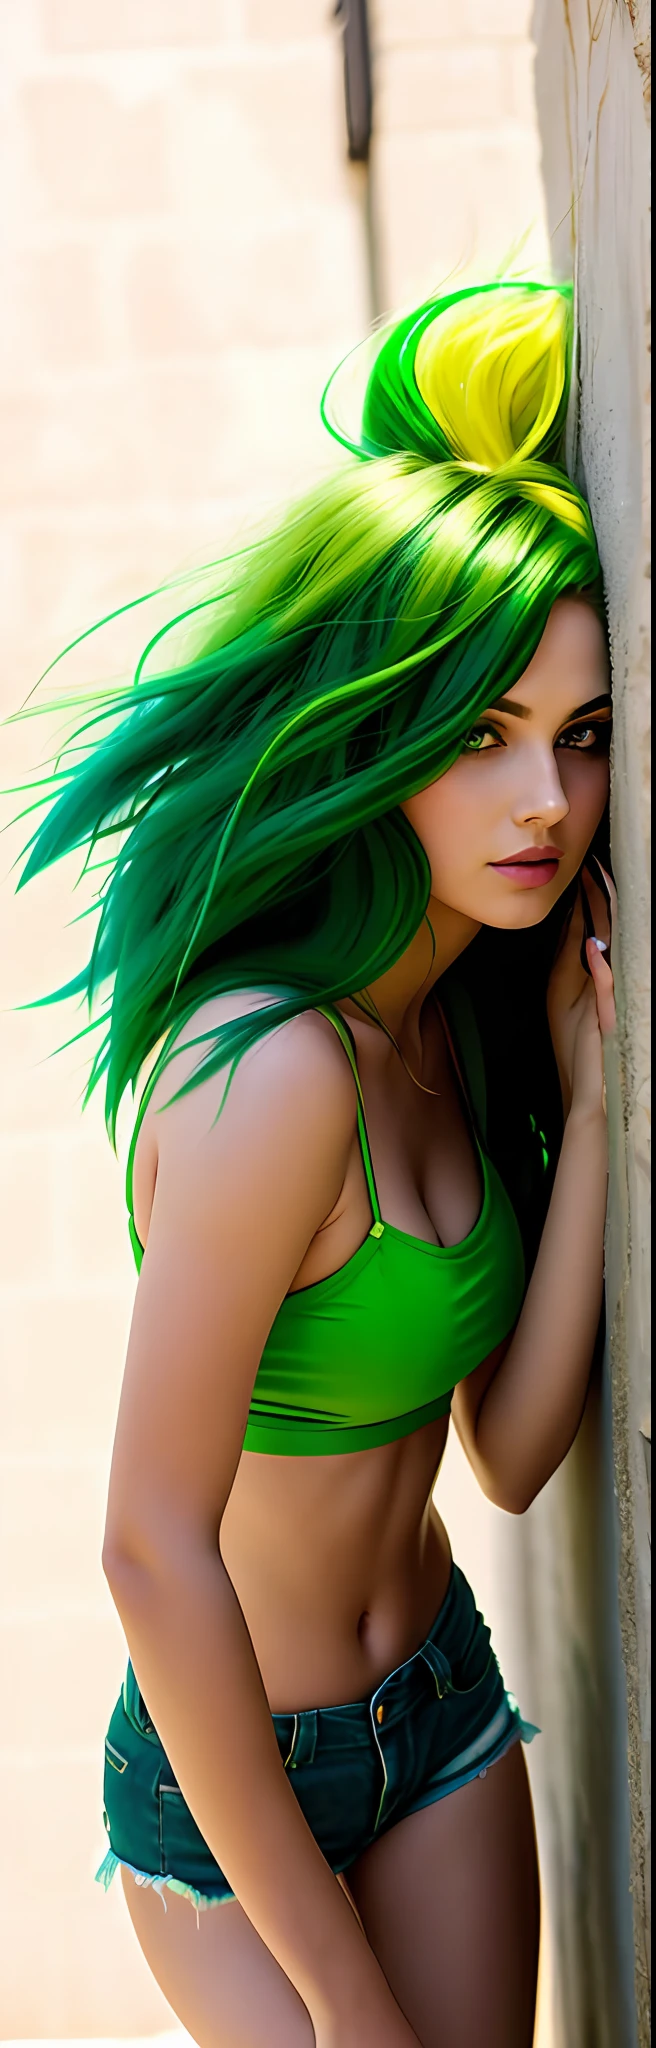 araffe woman with 绿色头发 leaning against a wall, 绿眼睛的性感女孩, long 绿色头发, 绿色头发, 漂亮的衣服, 绿色鬃毛, 紧身衣, 鲜亮的绿色, 坯体, 性感绿色短裤, 一些绿色, 靠在墙上, bright 绿色头发, 绿黑色长直发, 绿腿, 绿色飘逸的头发, 穿短裤